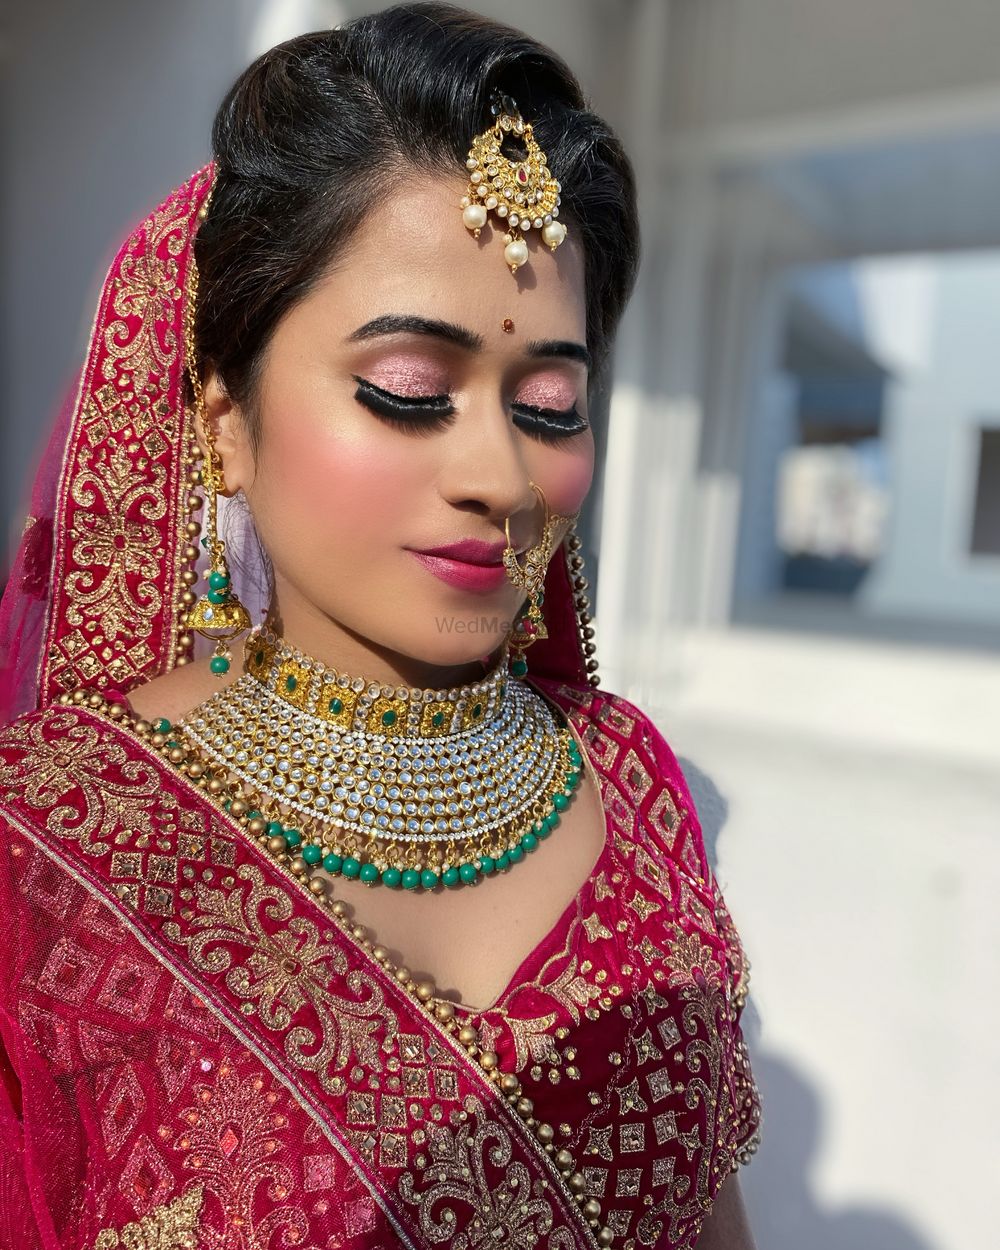 Photo From 2020 - By Piyaa Puri Make-Up and Hair Artist